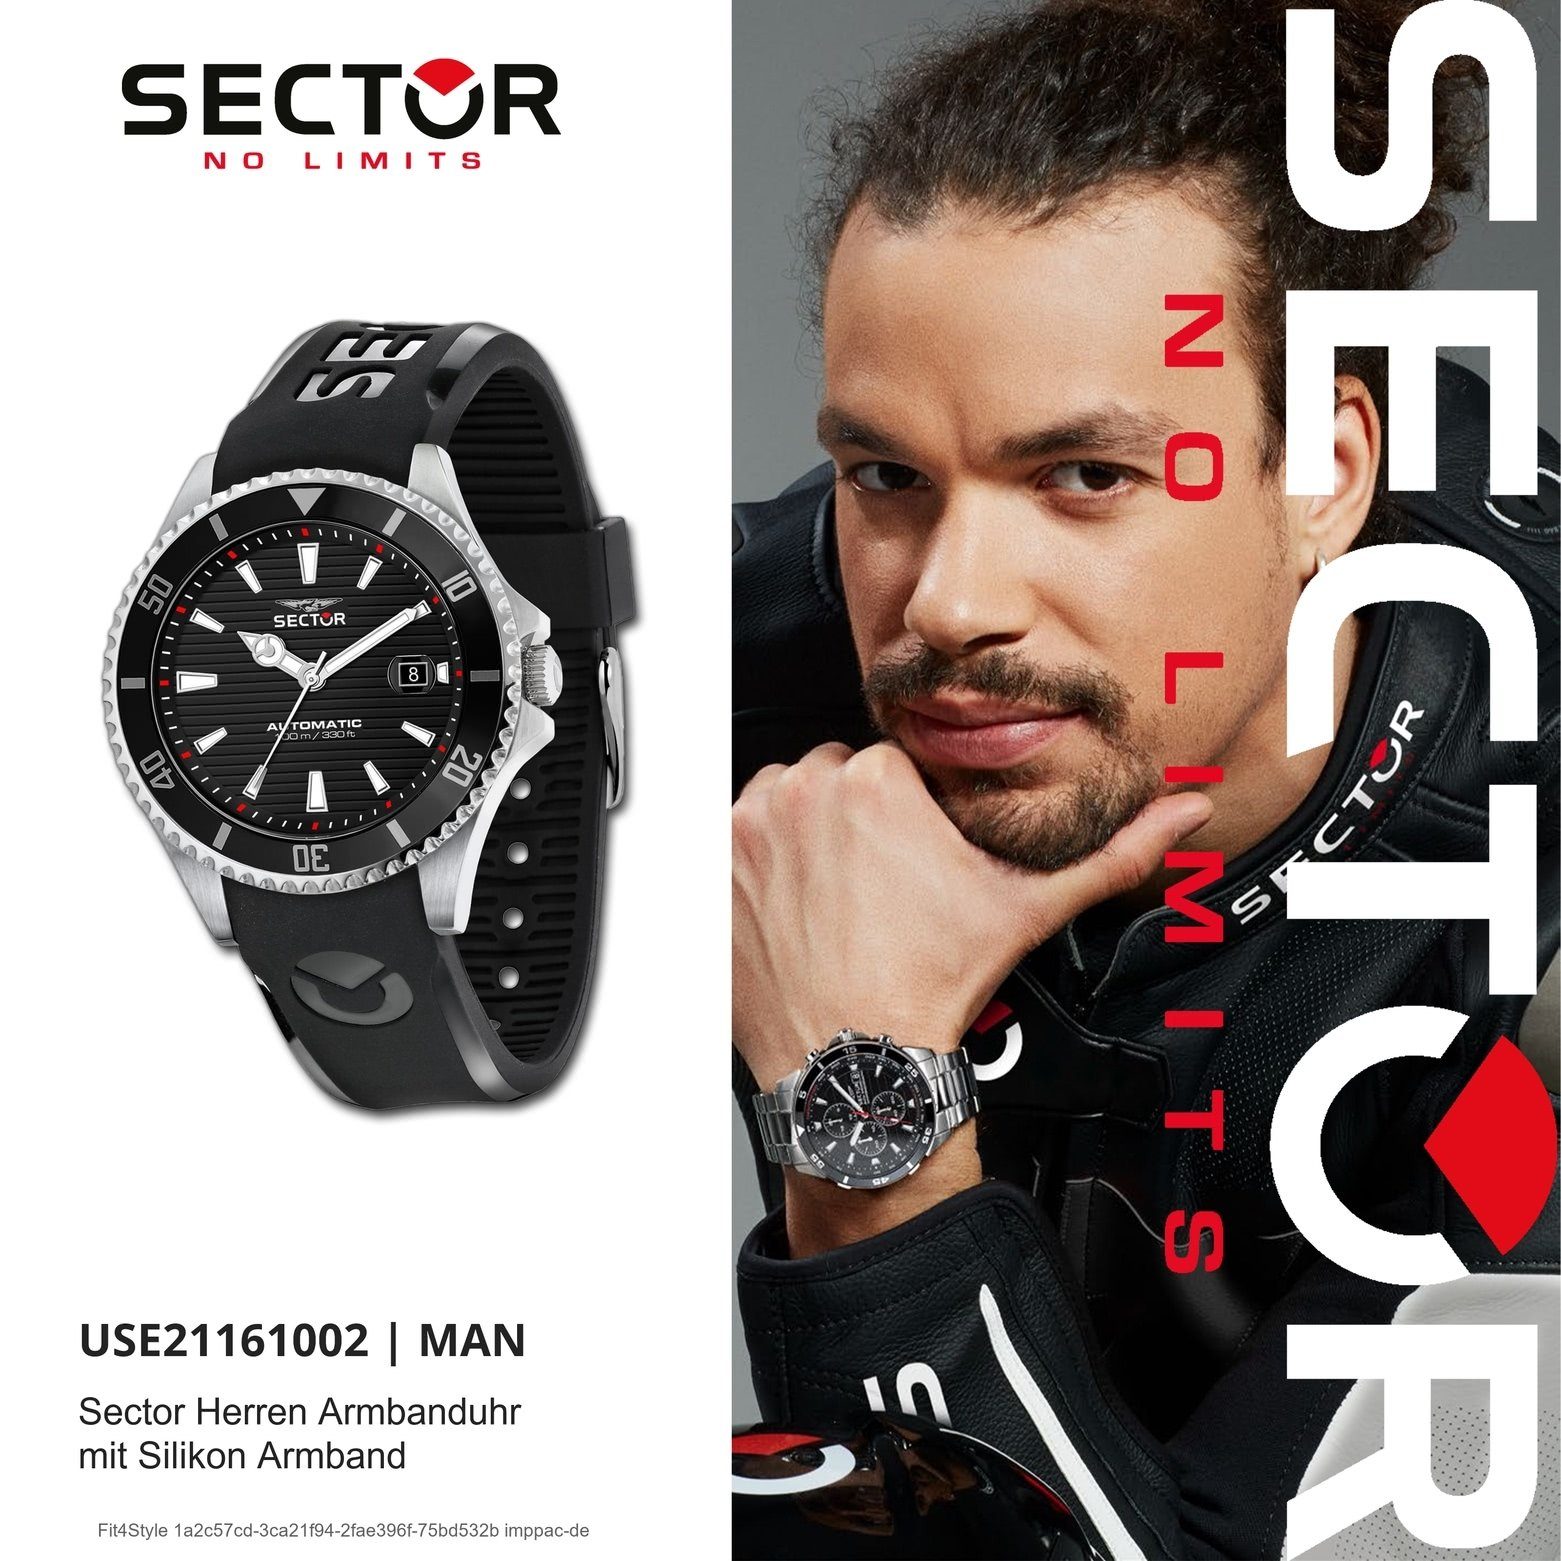 Herren Sector Sector Analog, Armbanduhr Herren rund, Casual schwarz, Armbanduhr Silikonarmband Quarzuhr groß (43mm),